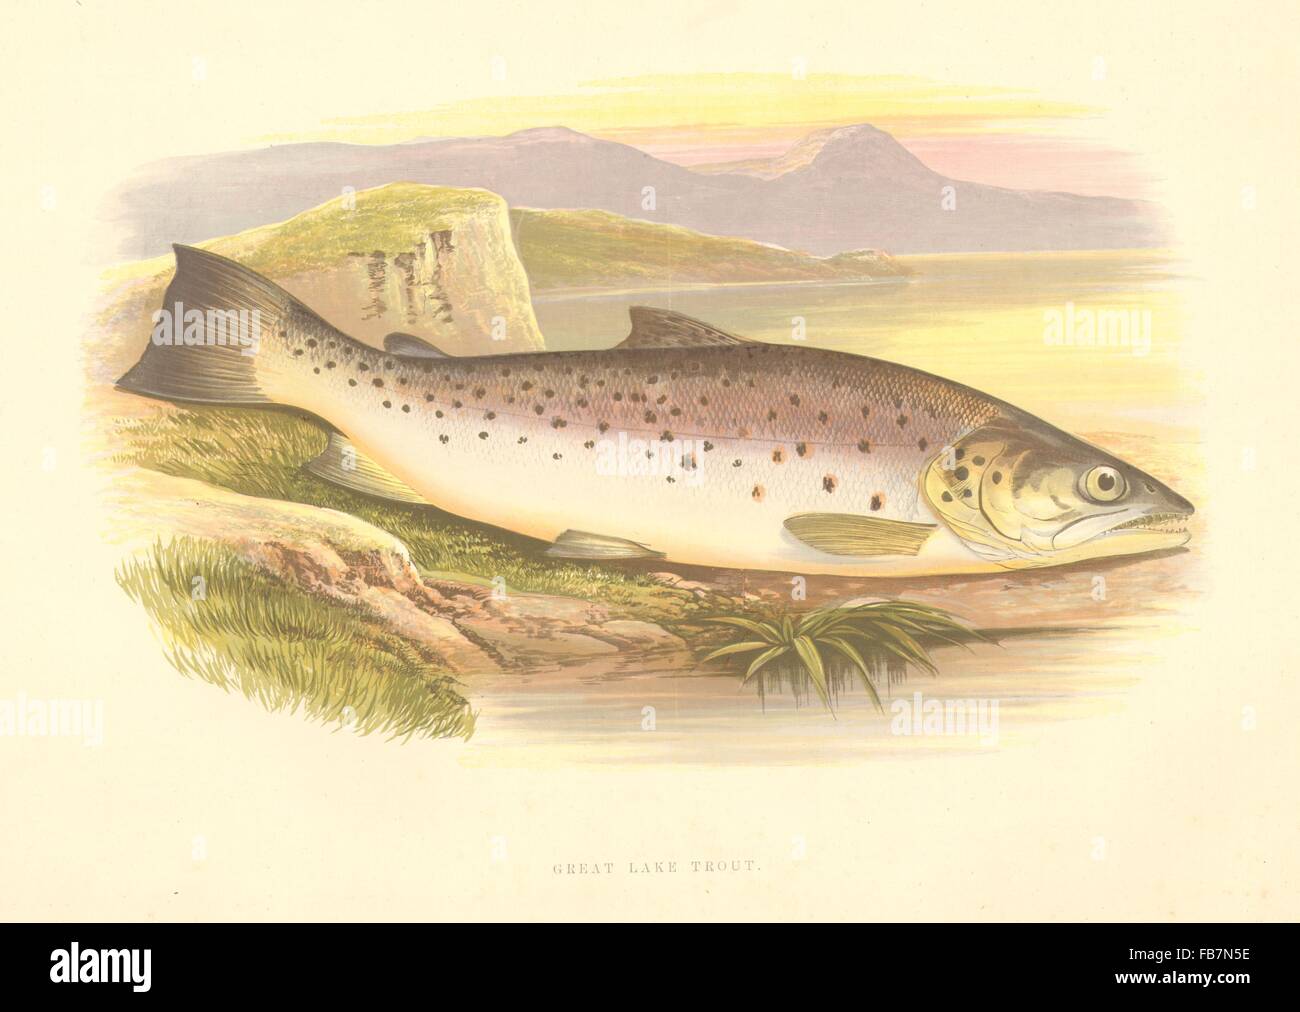 FRESHWATER FISH: Great Lake Trout (Salmo ferox) - Houghton / Lydon, print 1879 Stock Photo